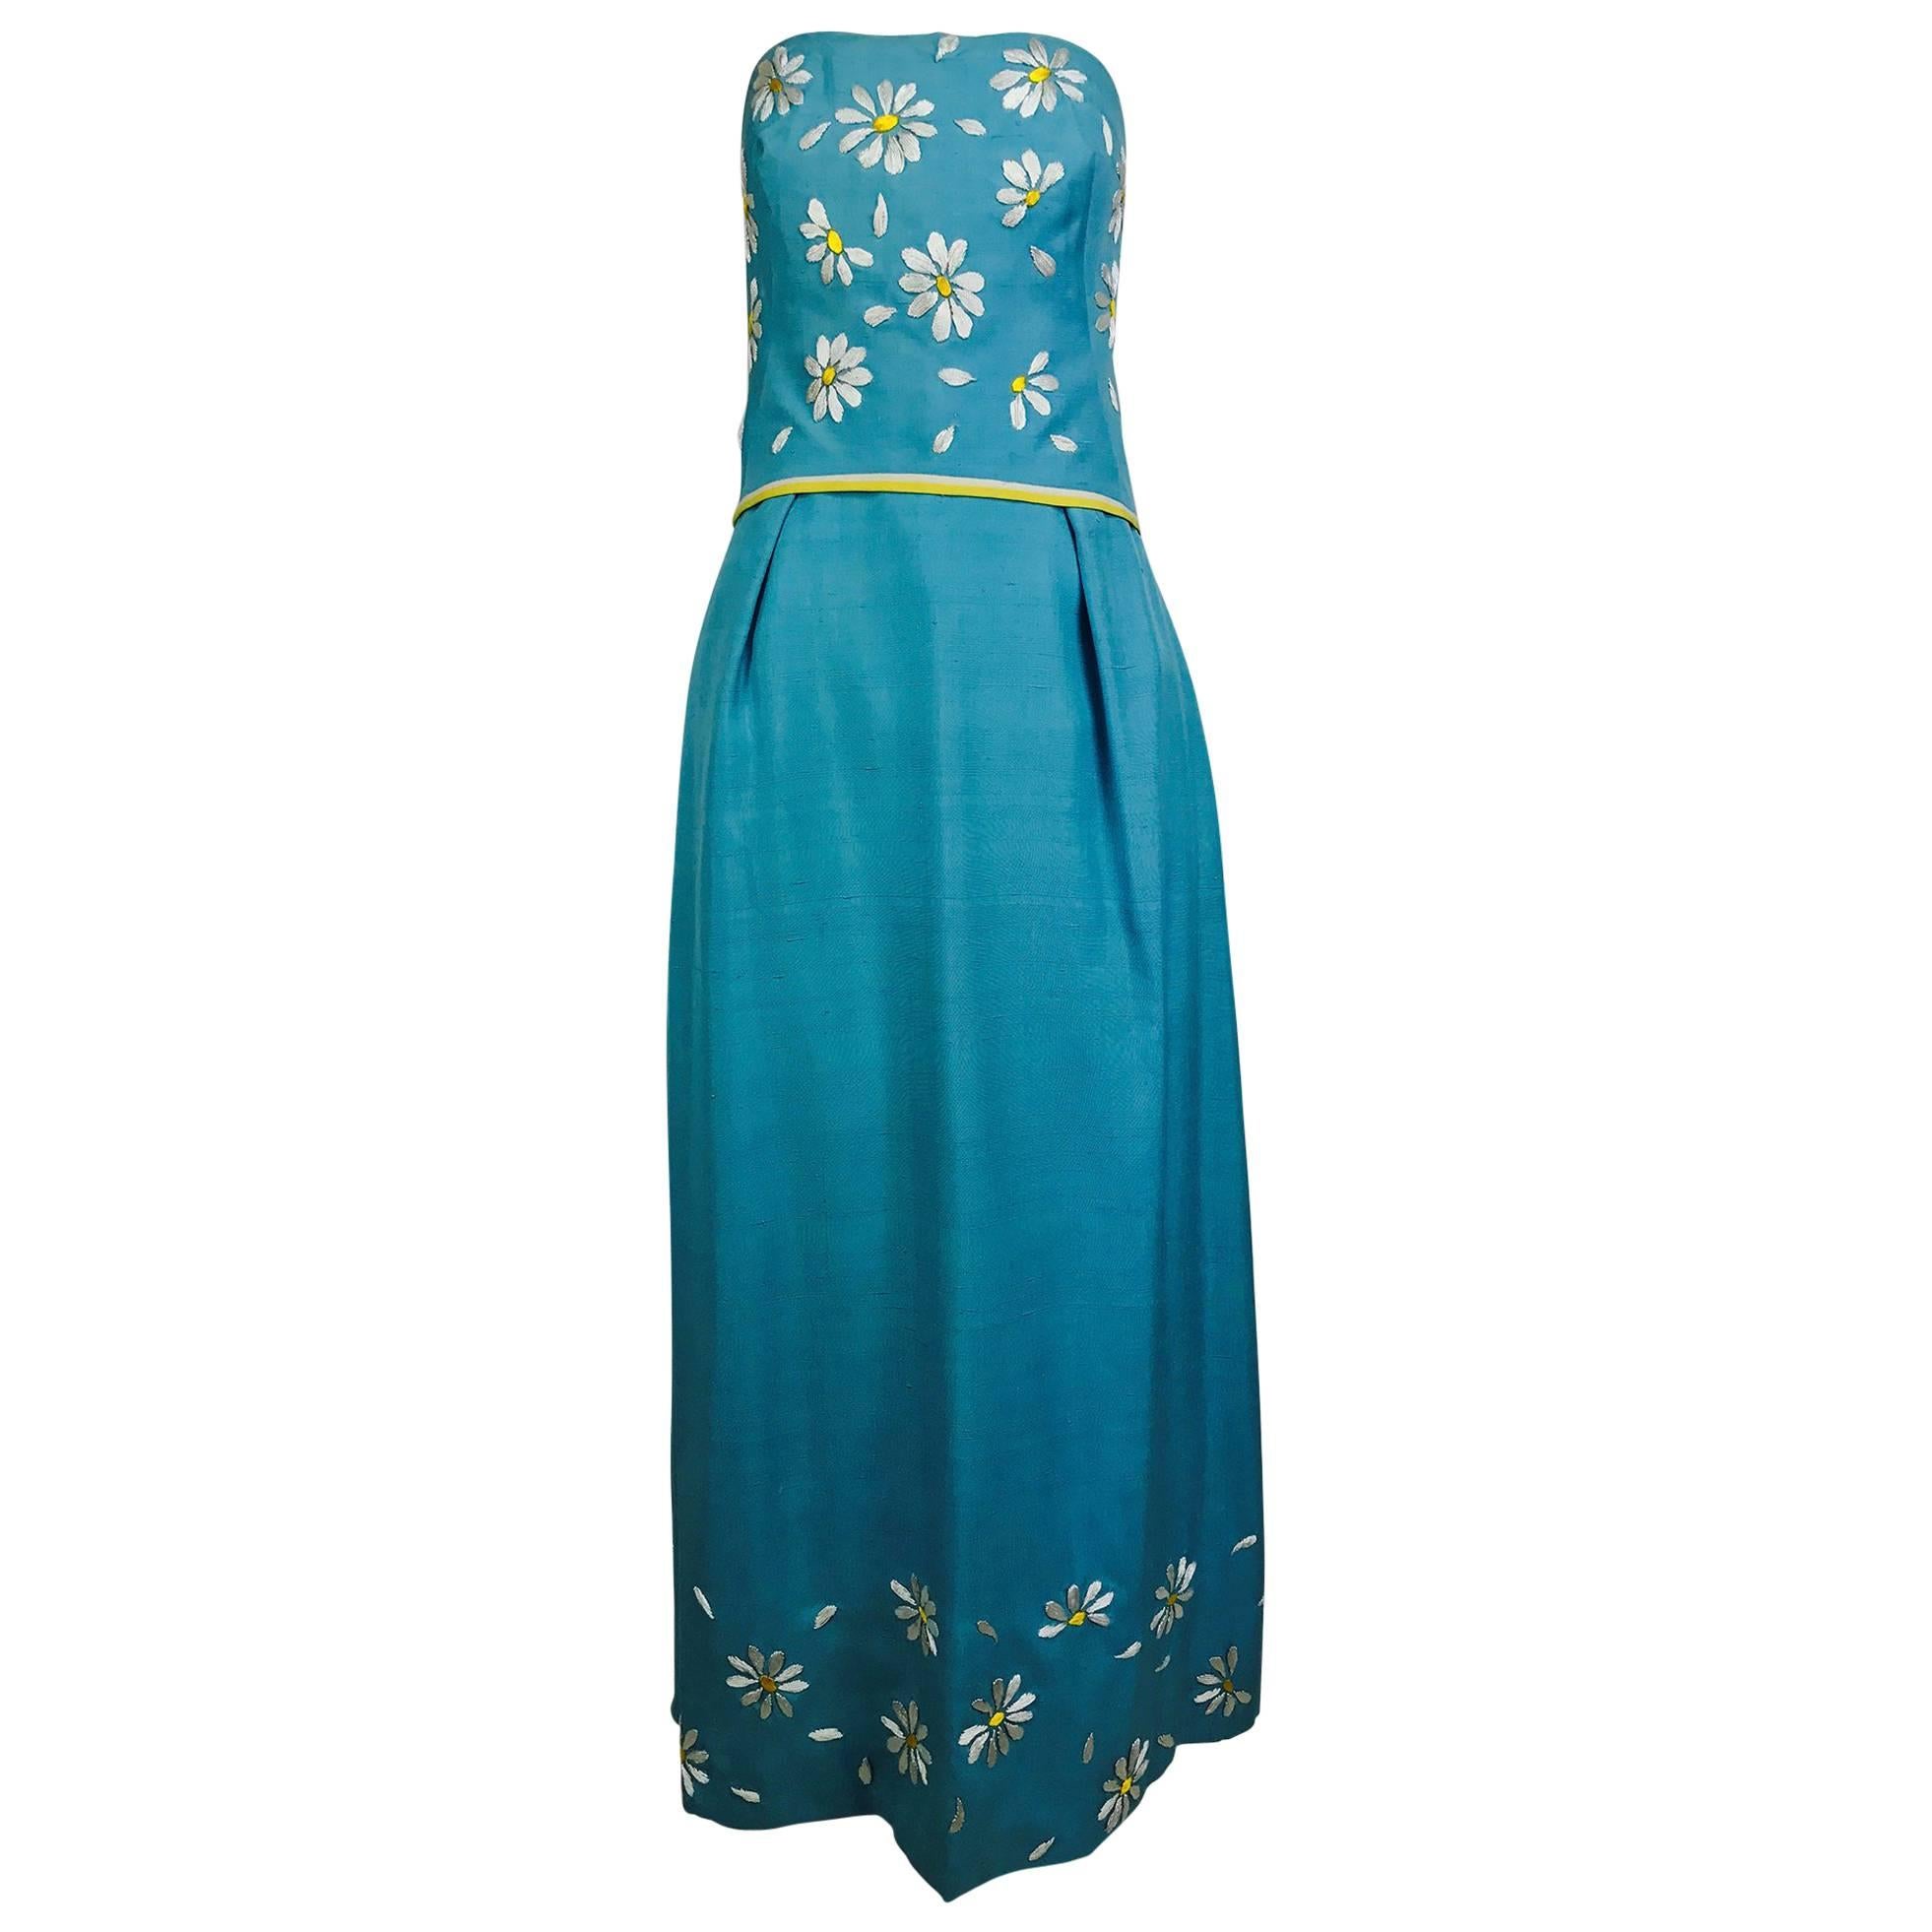 Vintage Philip Hulitar daisy embroidered blue slub silk strapless gown 1950s